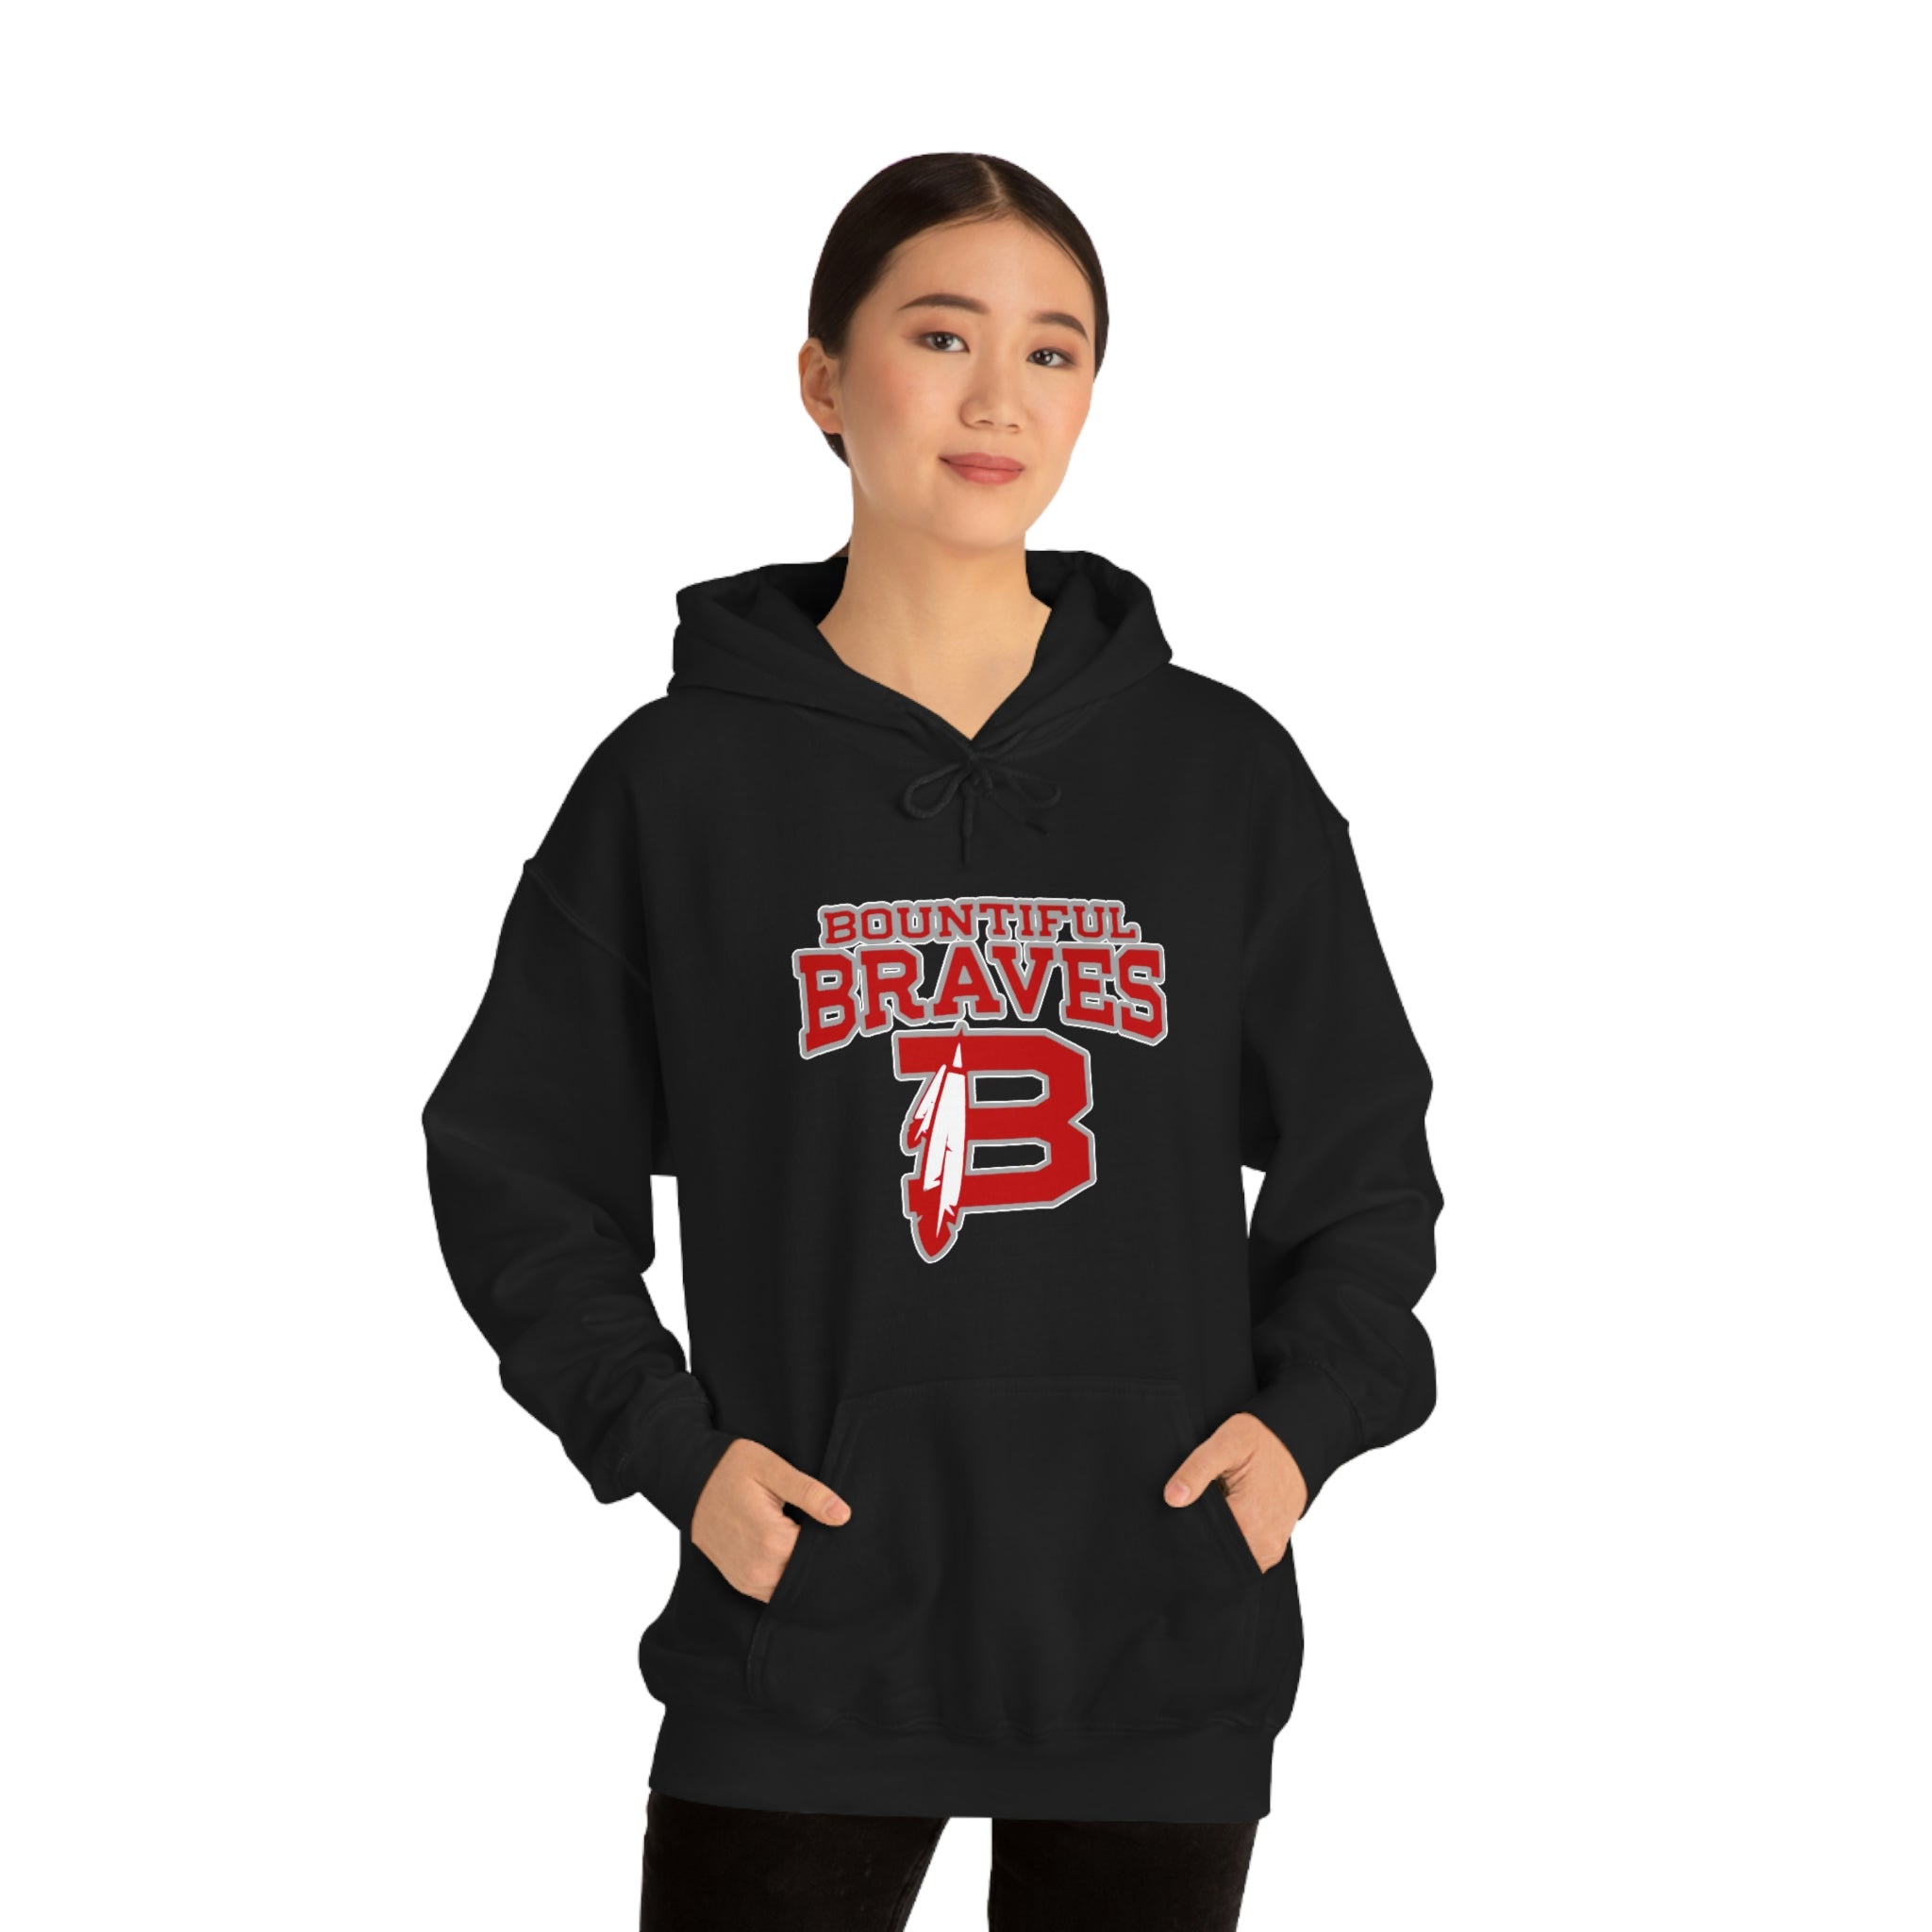 Buffalo Braves Hoodie Black XL for Sale in Tonawanda, NY - OfferUp